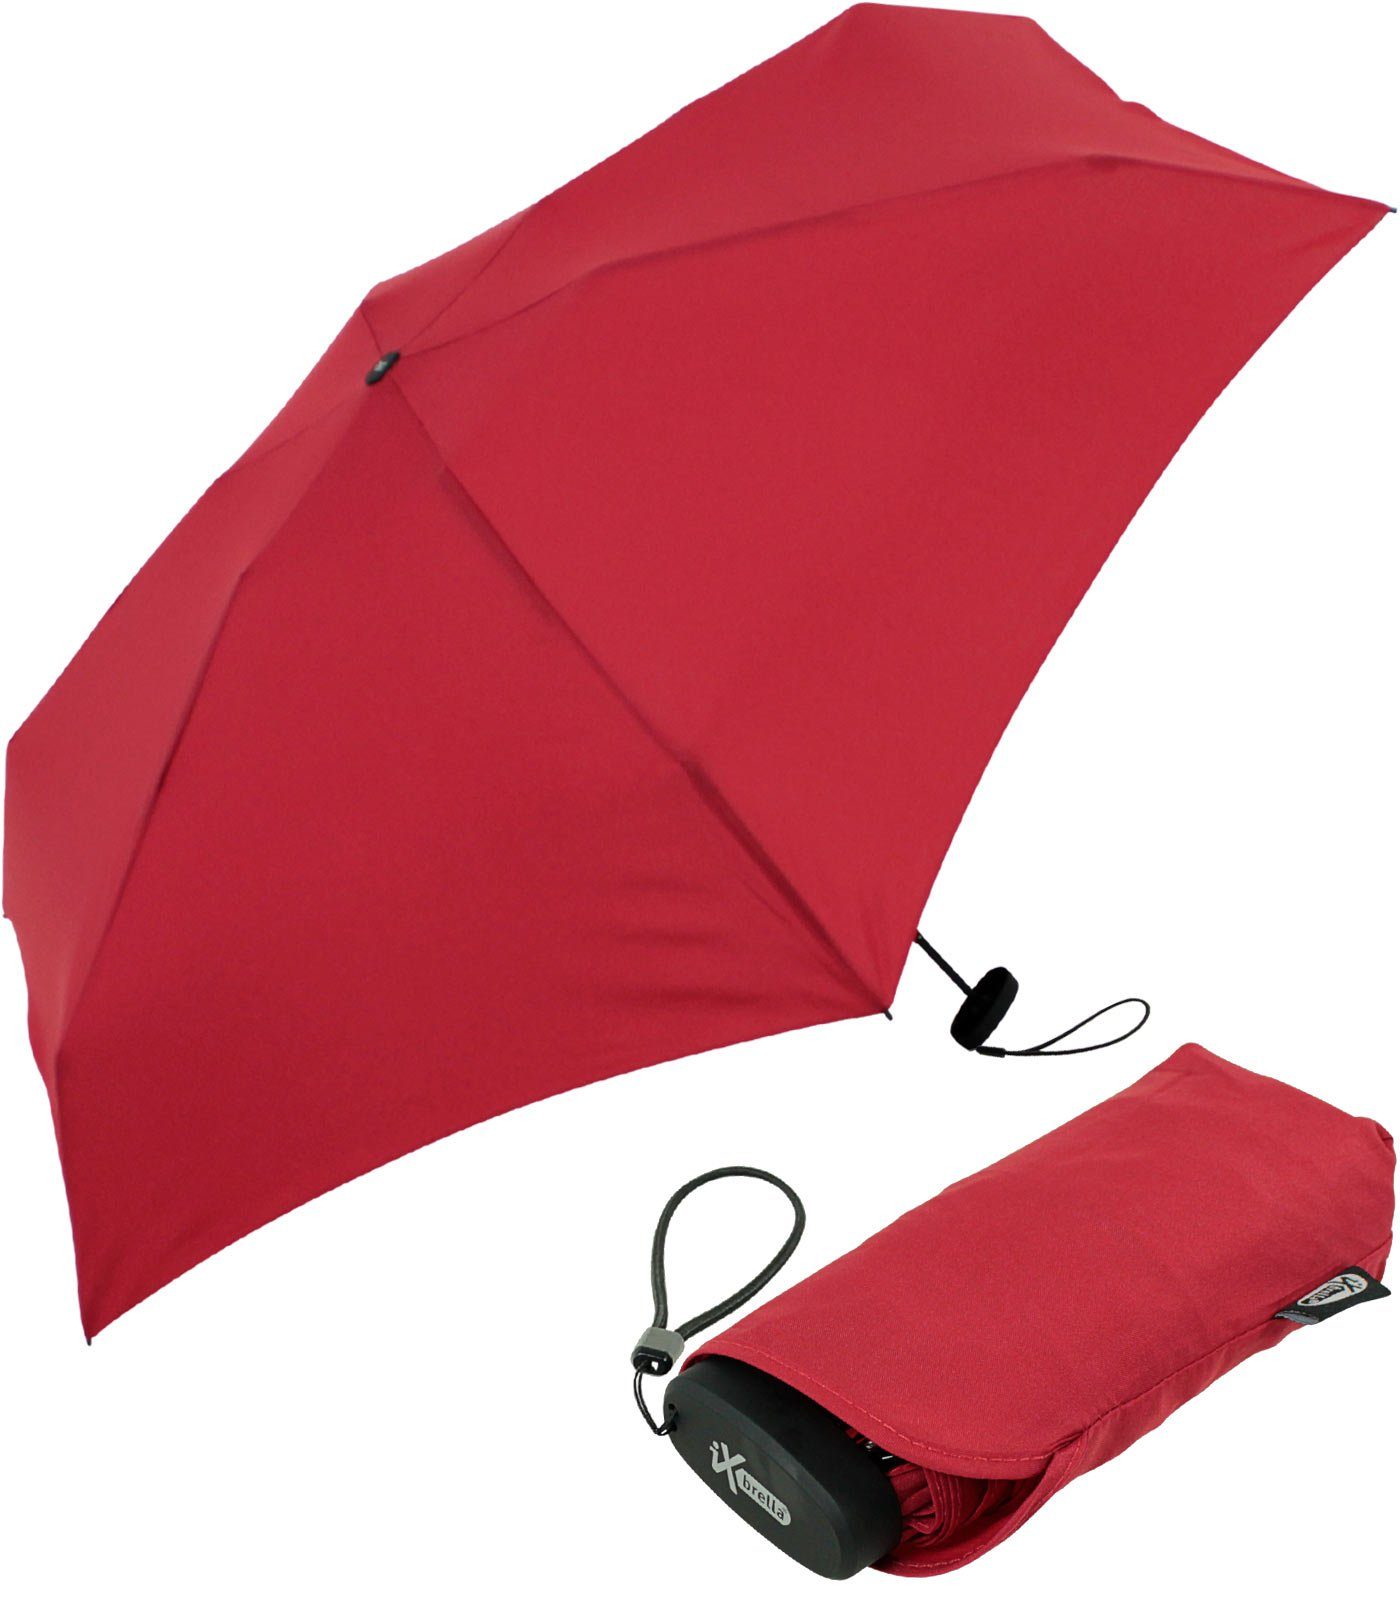 15 ultra-klein Format, Schirm iX-brella Handy im winziger dunkelrot cm Mini Ultra Taschenregenschirm